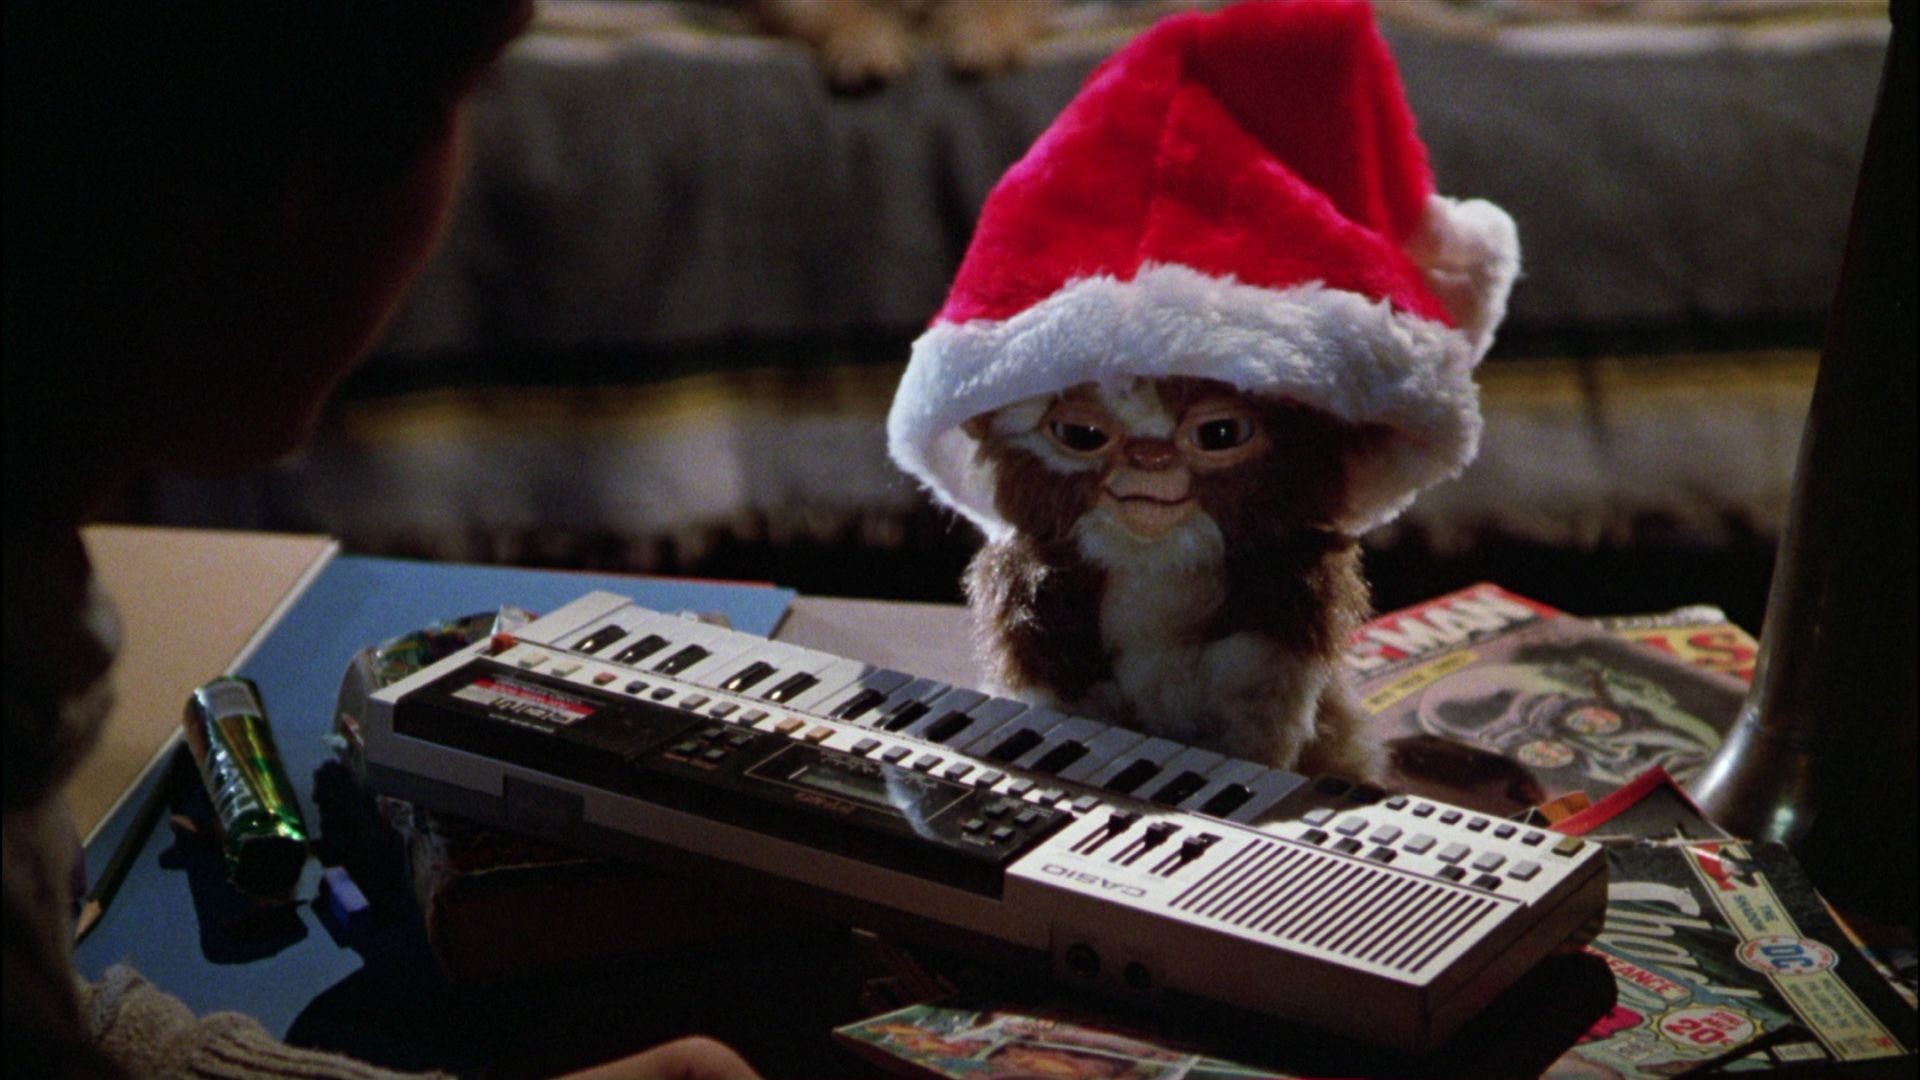 General 1920x1080 Gizmo Gremlins movies Santa hats keyboards musical instrument film stills